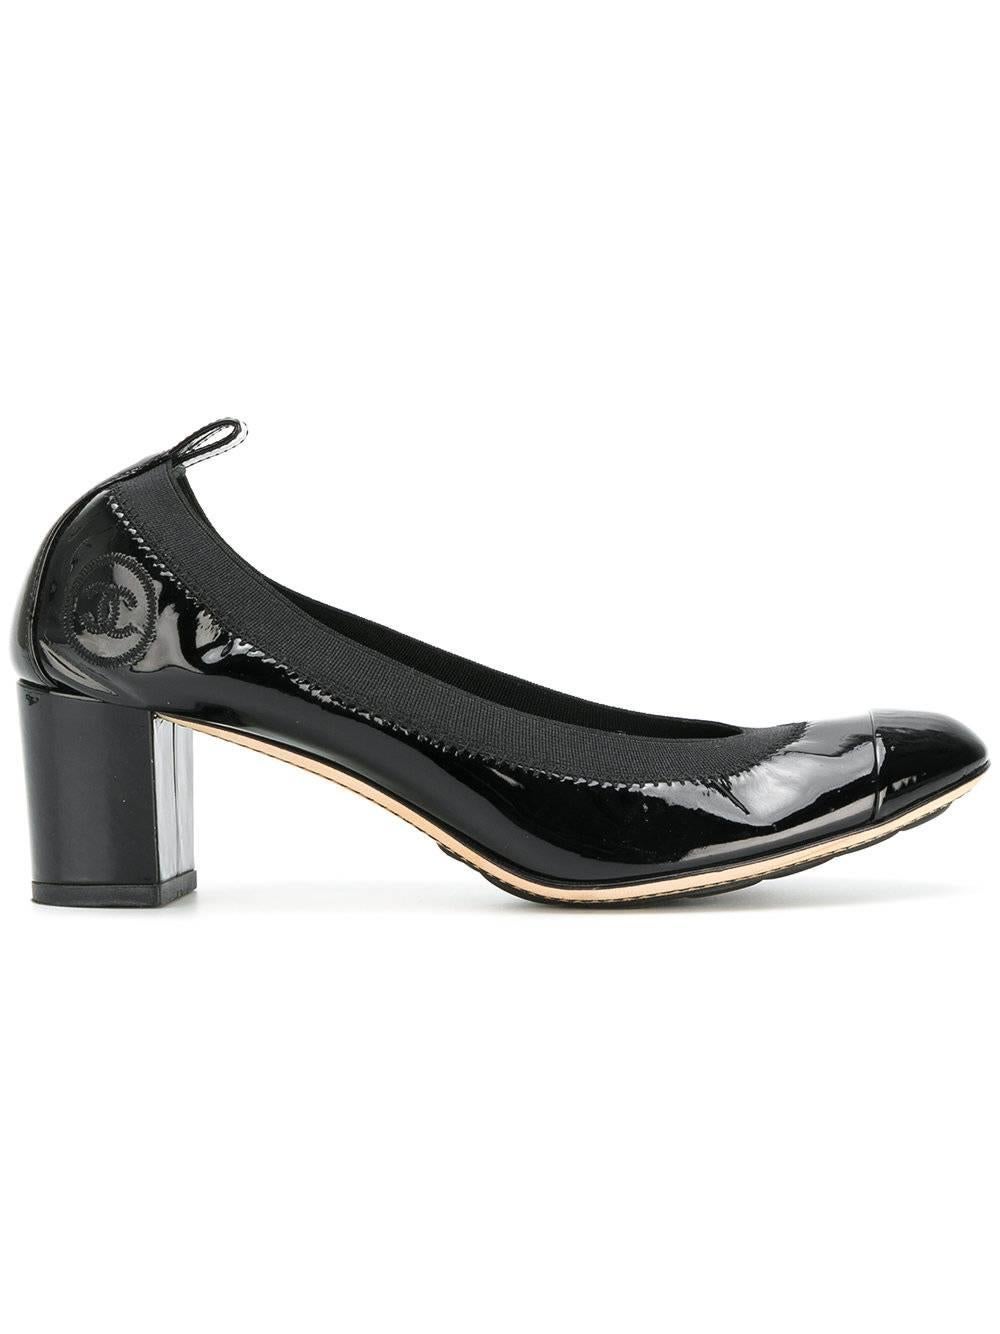 Women's Chanel Black Patent Leather Block Heels